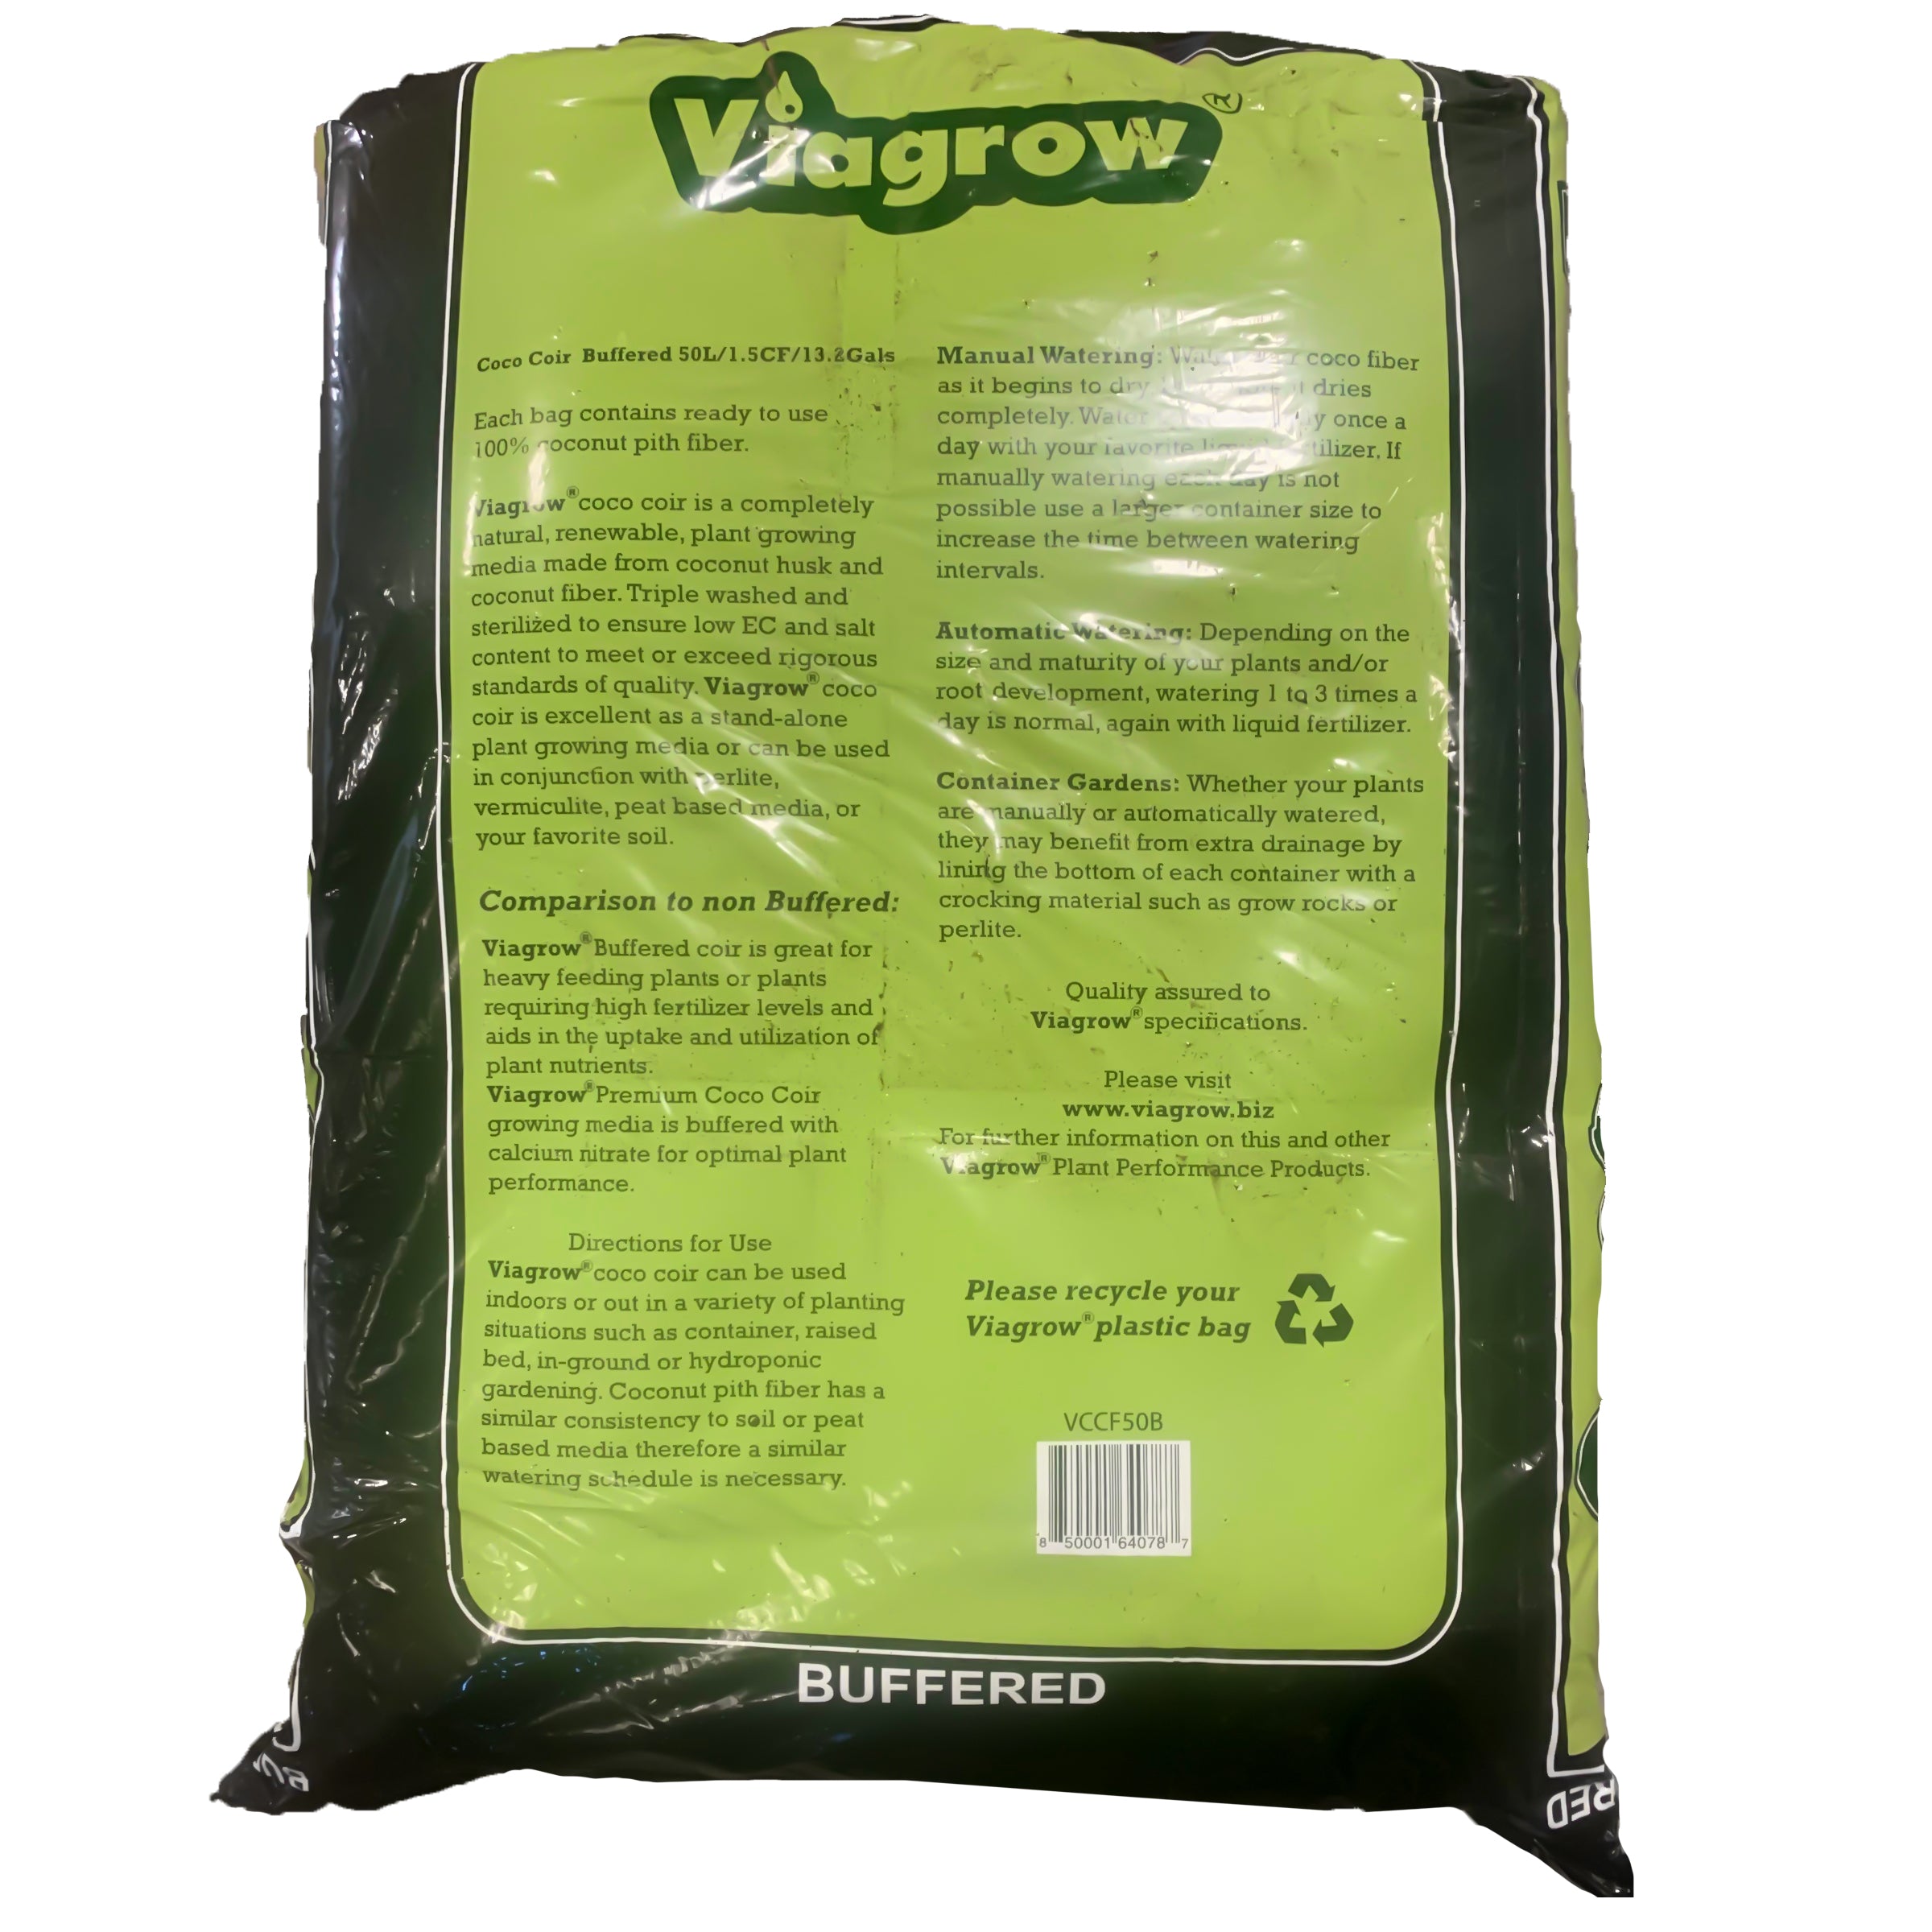 Viagrow Coco Coir Buffered milieu de culture de noix de coco premium 50L/52,8 qts /1,5CF/13,2Gals, Palette, 90 Sacs